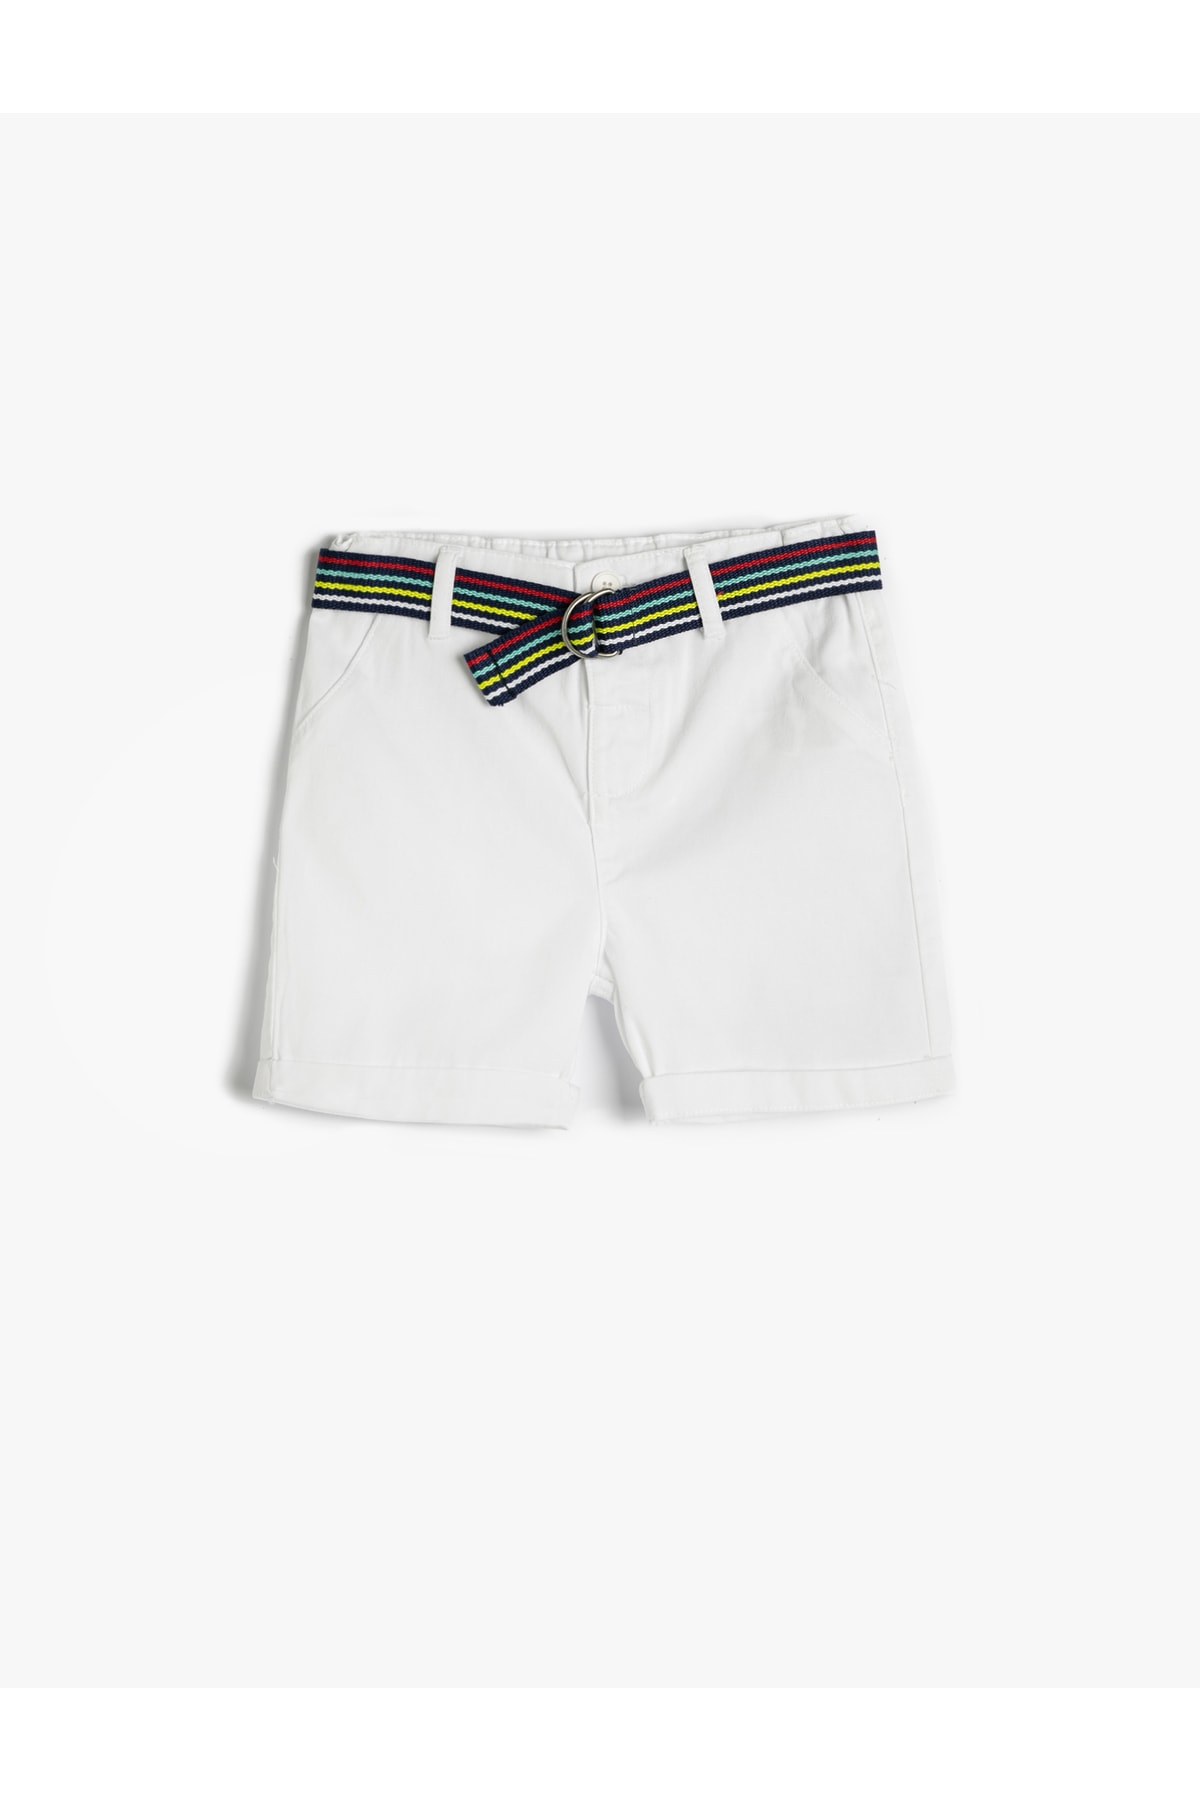 Levně Koton Shorts With Belt Detailed Pockets, Cotton Cotton with Adjustable Elastic Waist.